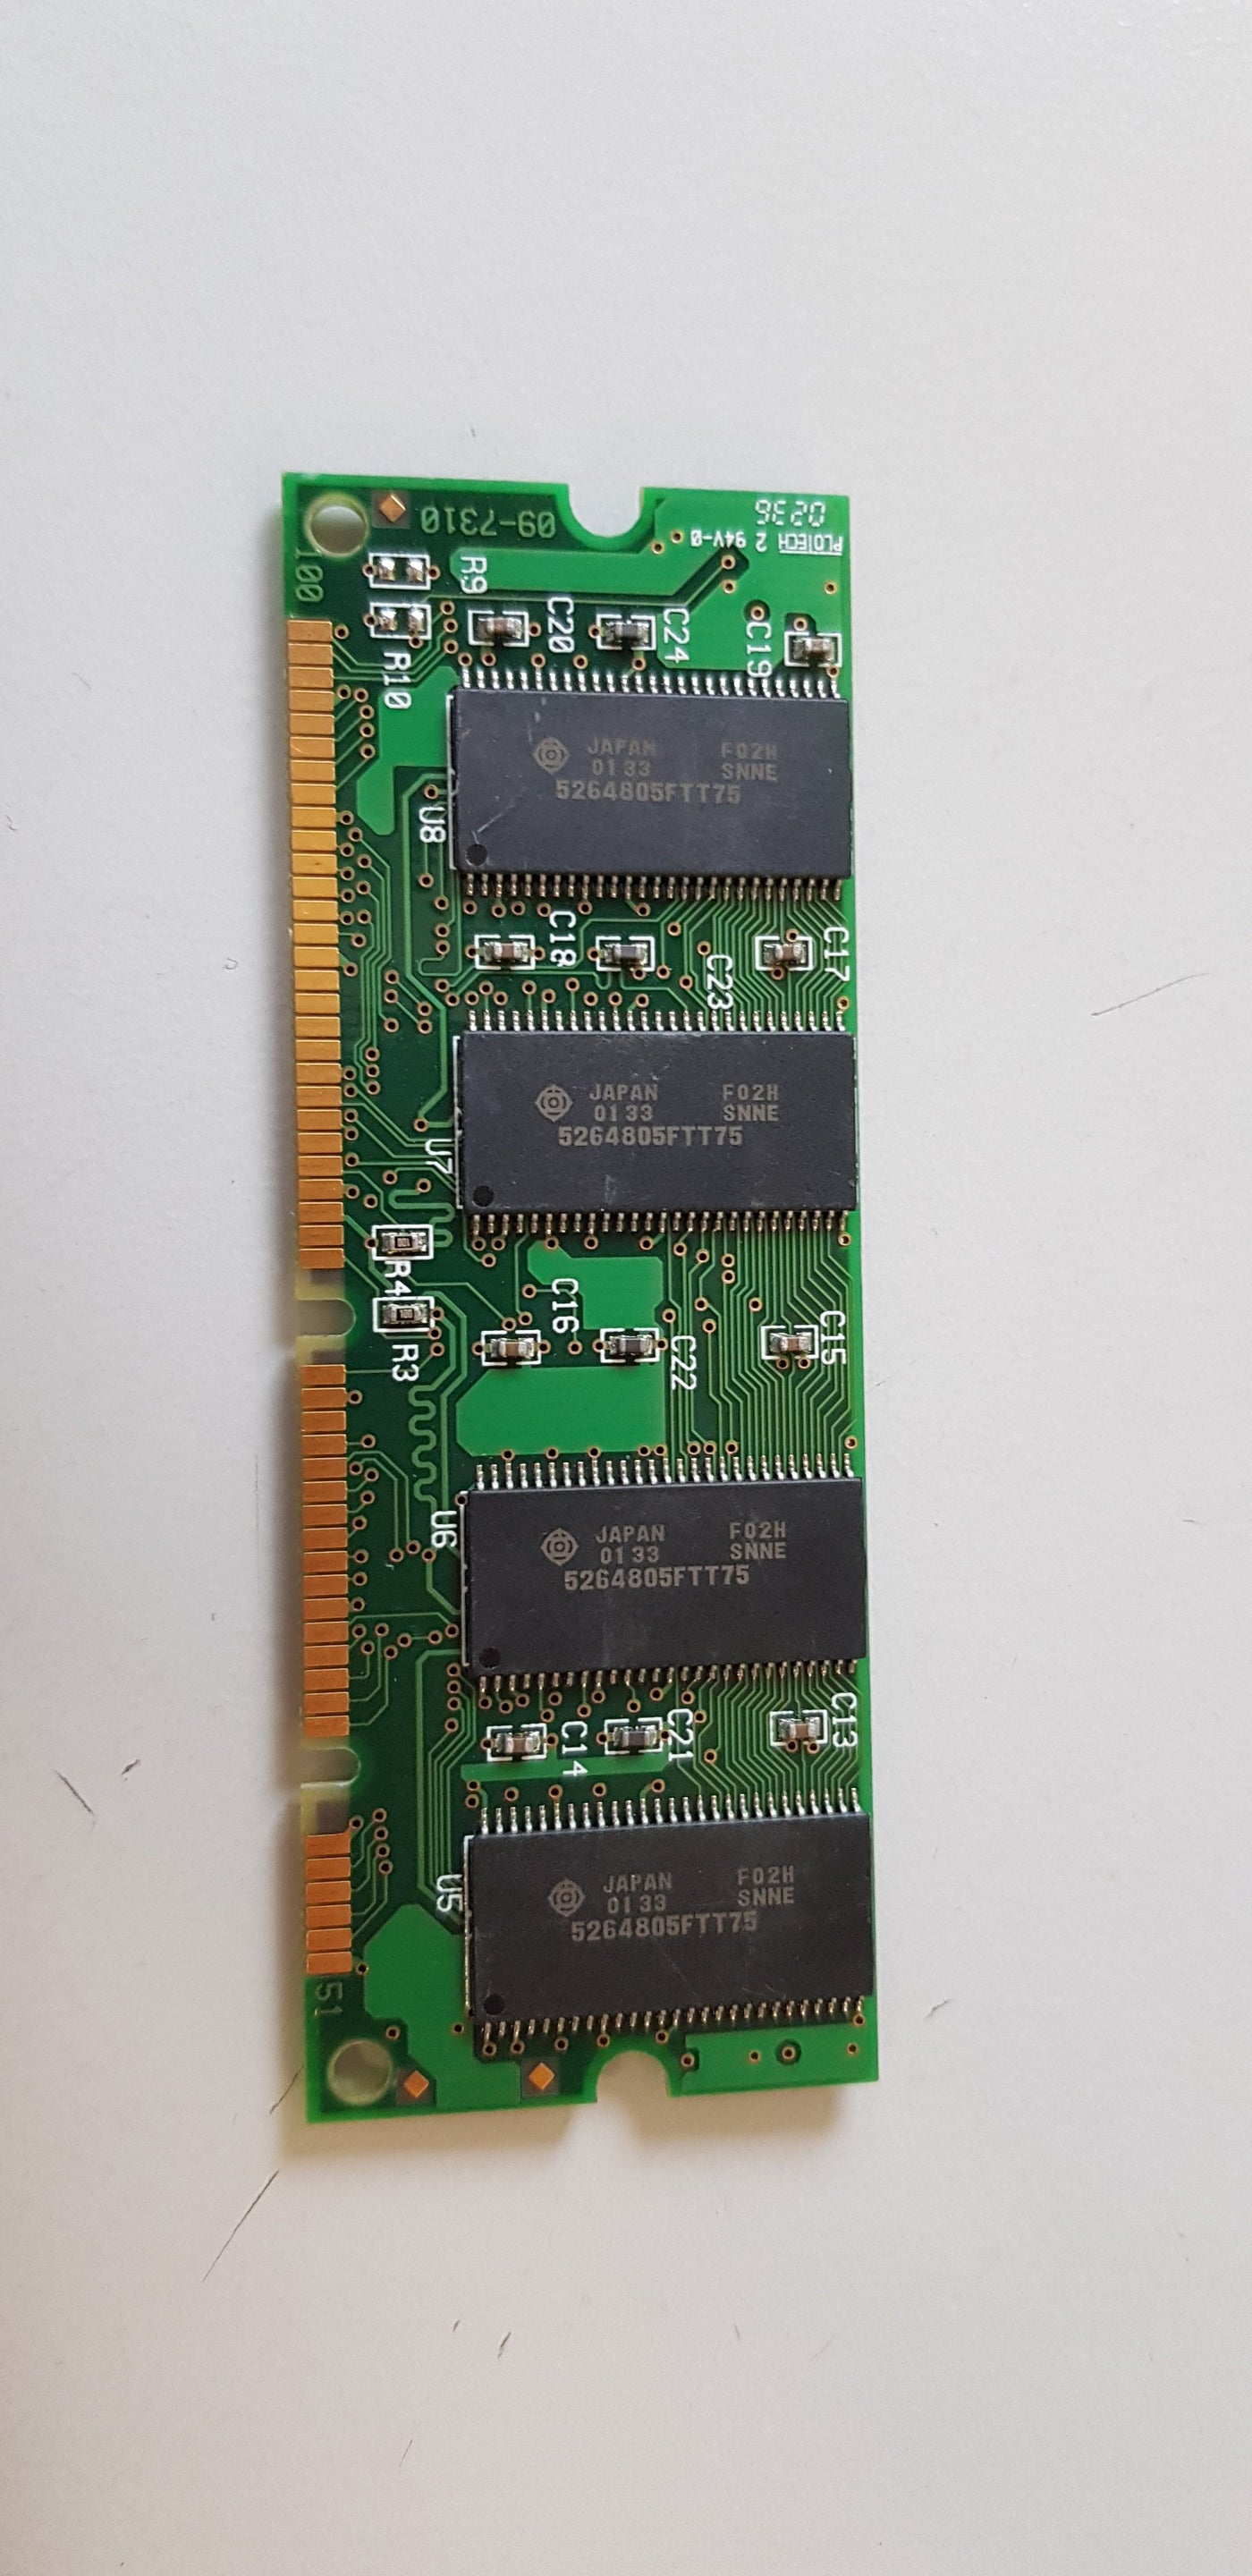 Transcend 64MB 100-Pin DRAM Memory Module ( TS64MLJ8000 ) REF